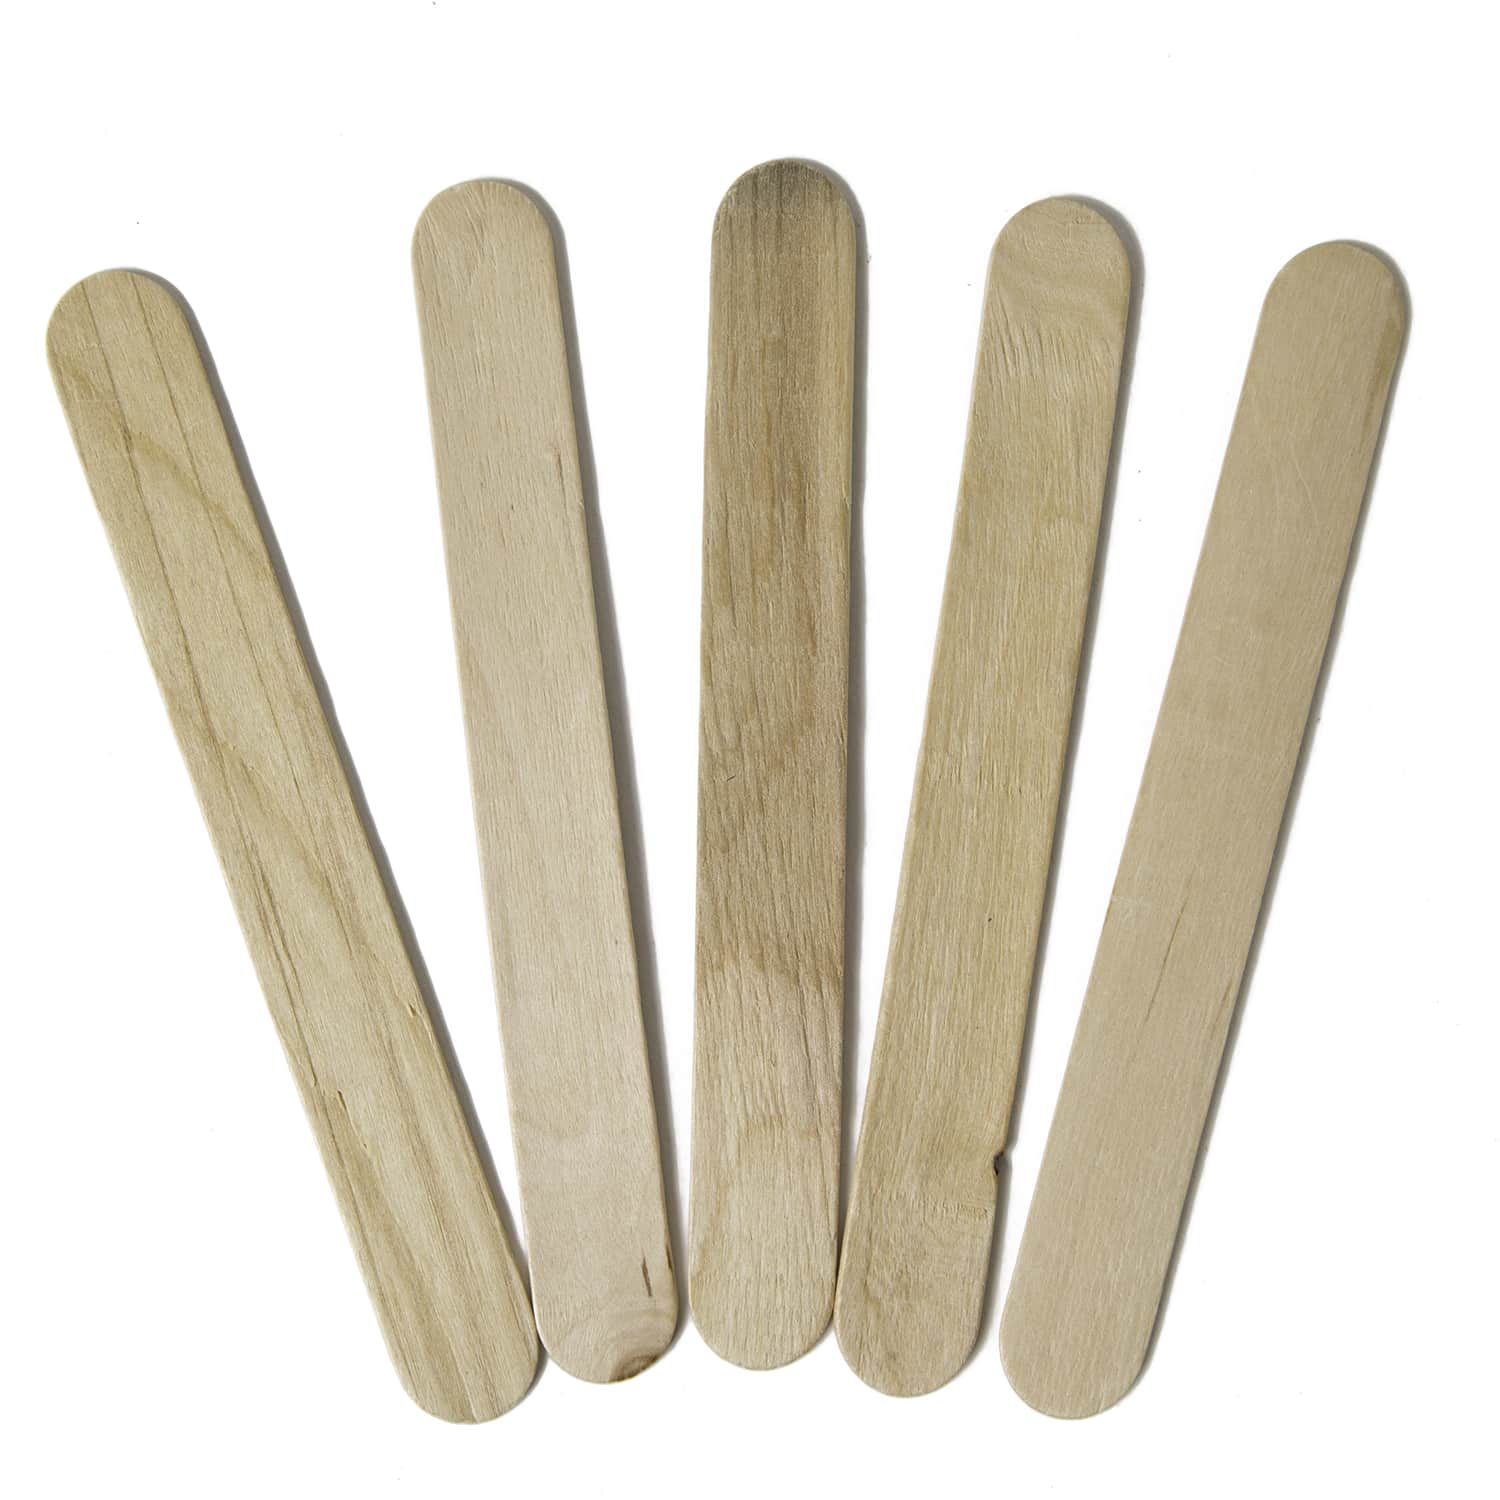 Perfect Stix 100ct Jumbo Craft Sticks 6 inch x 3/4 and 100ct 4.5 inch Multipurpose Craft Sticks., Premium Poplar Wood for Building, Mixing, and Craft